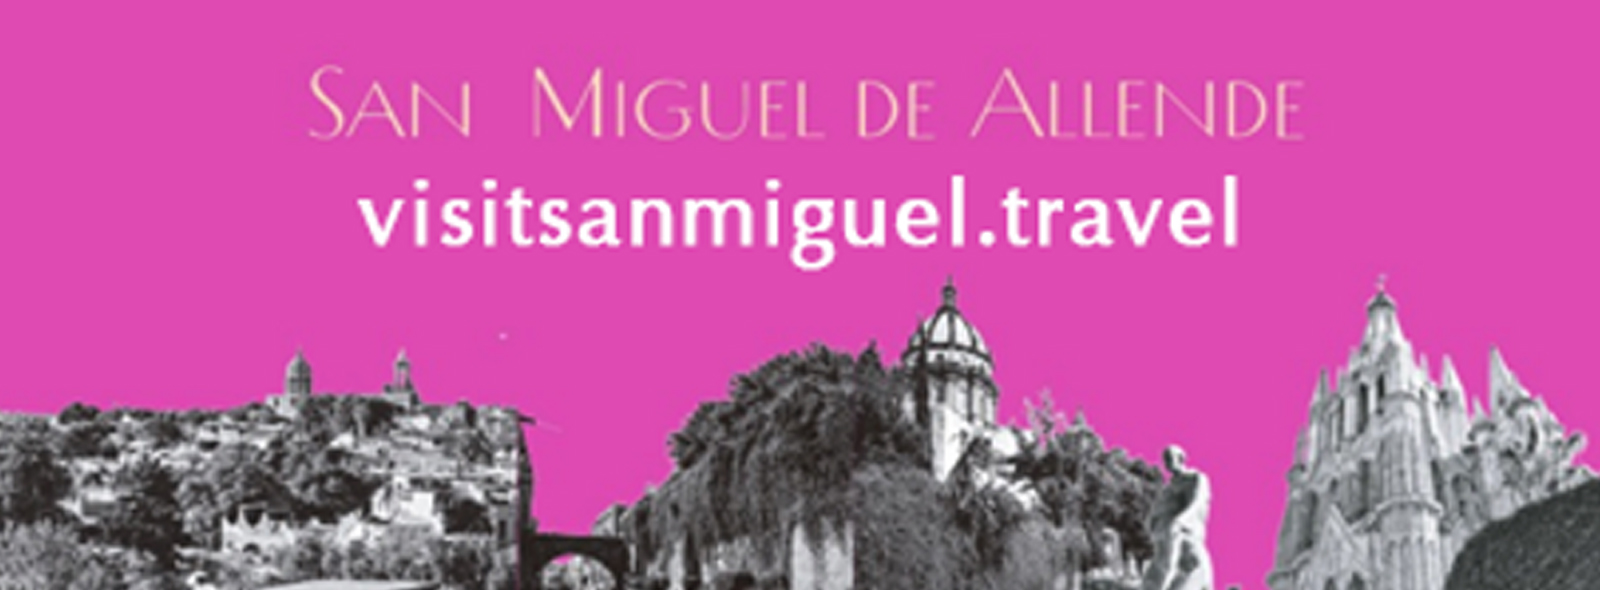 Visit San miguel